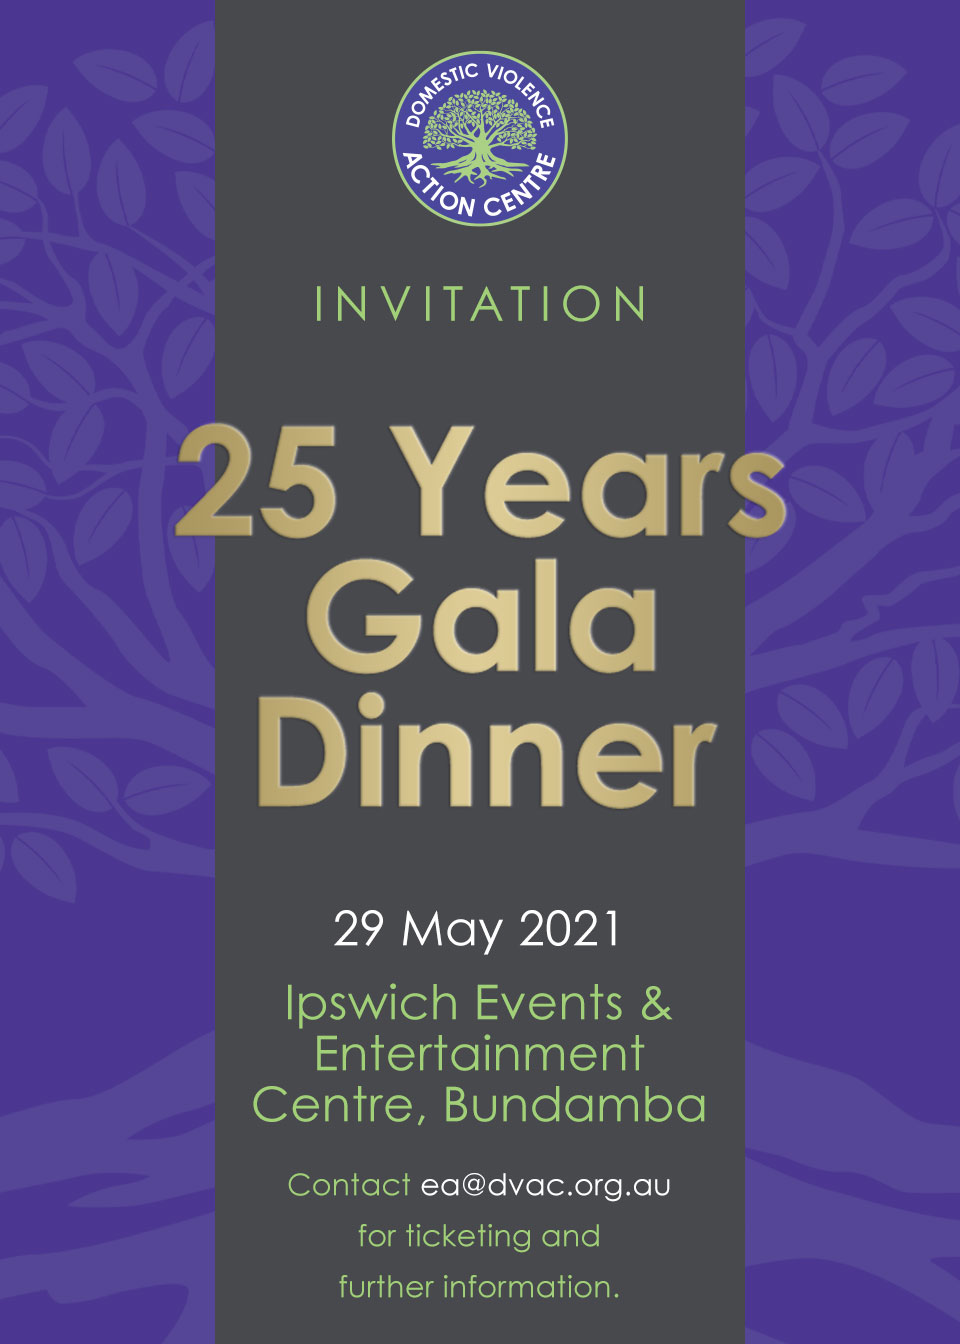 Invitation to 25 Years Gala Dinner